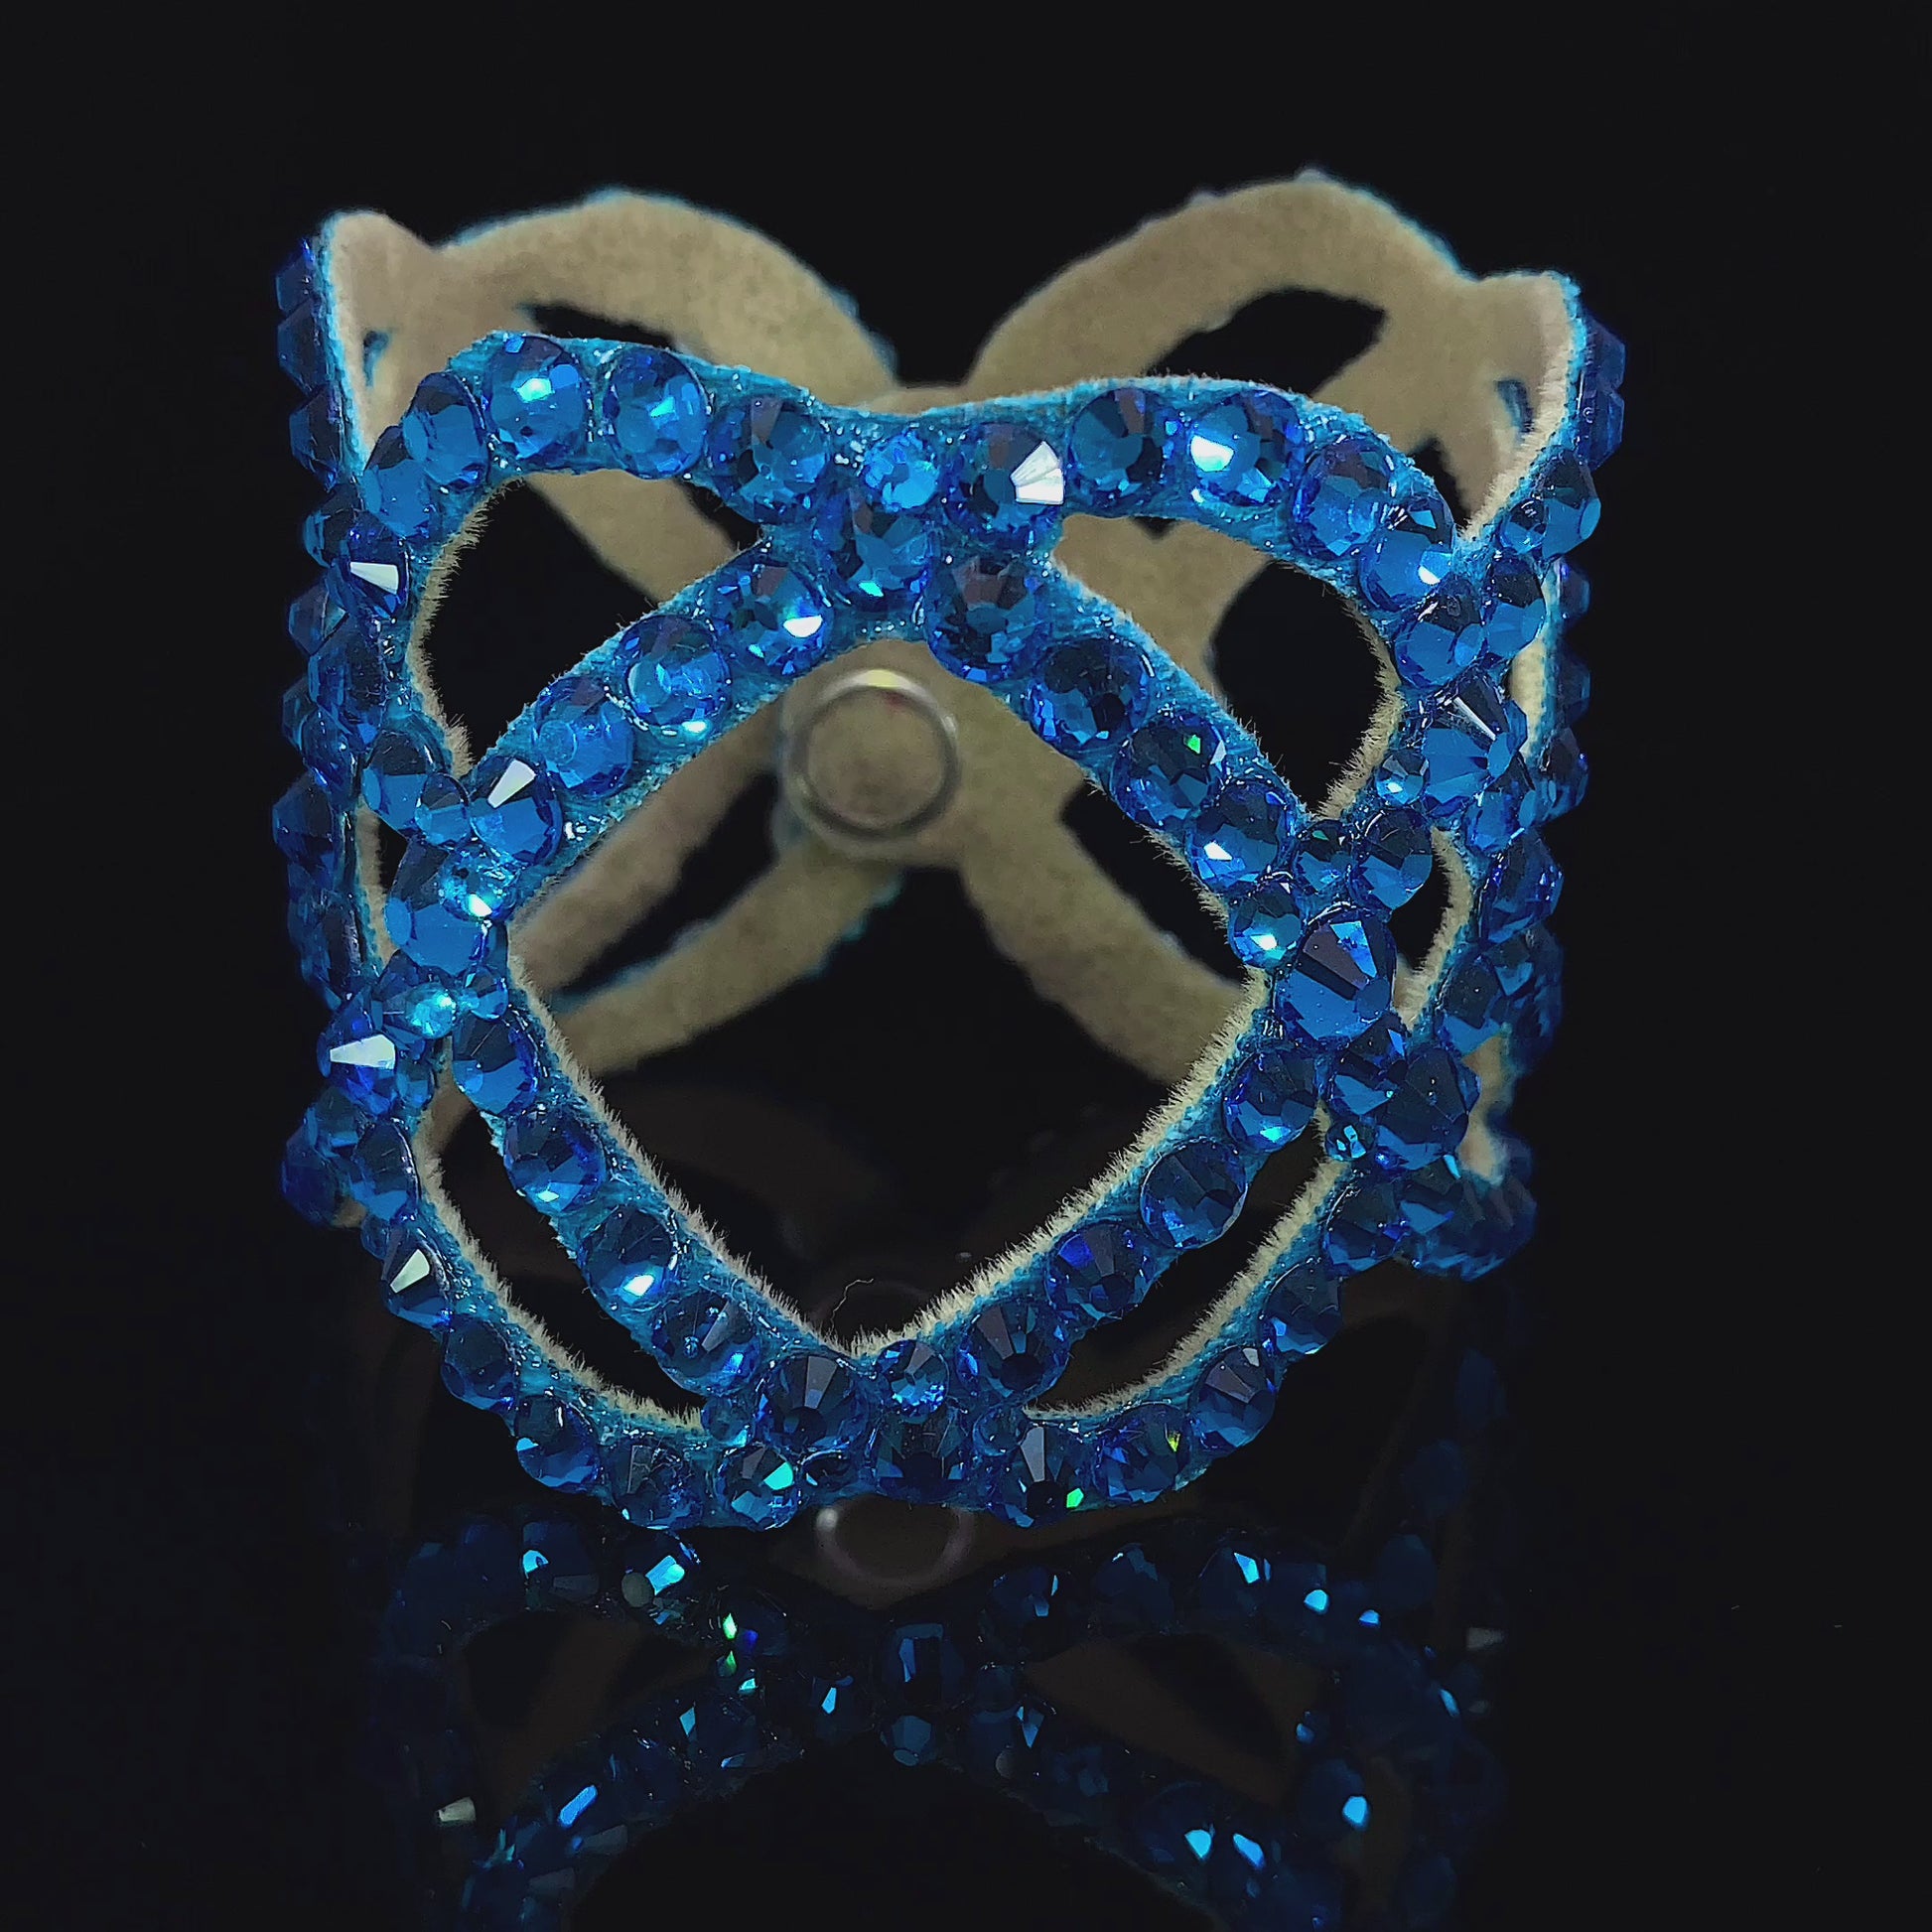 Video of blue stones on competitive dance bracelet